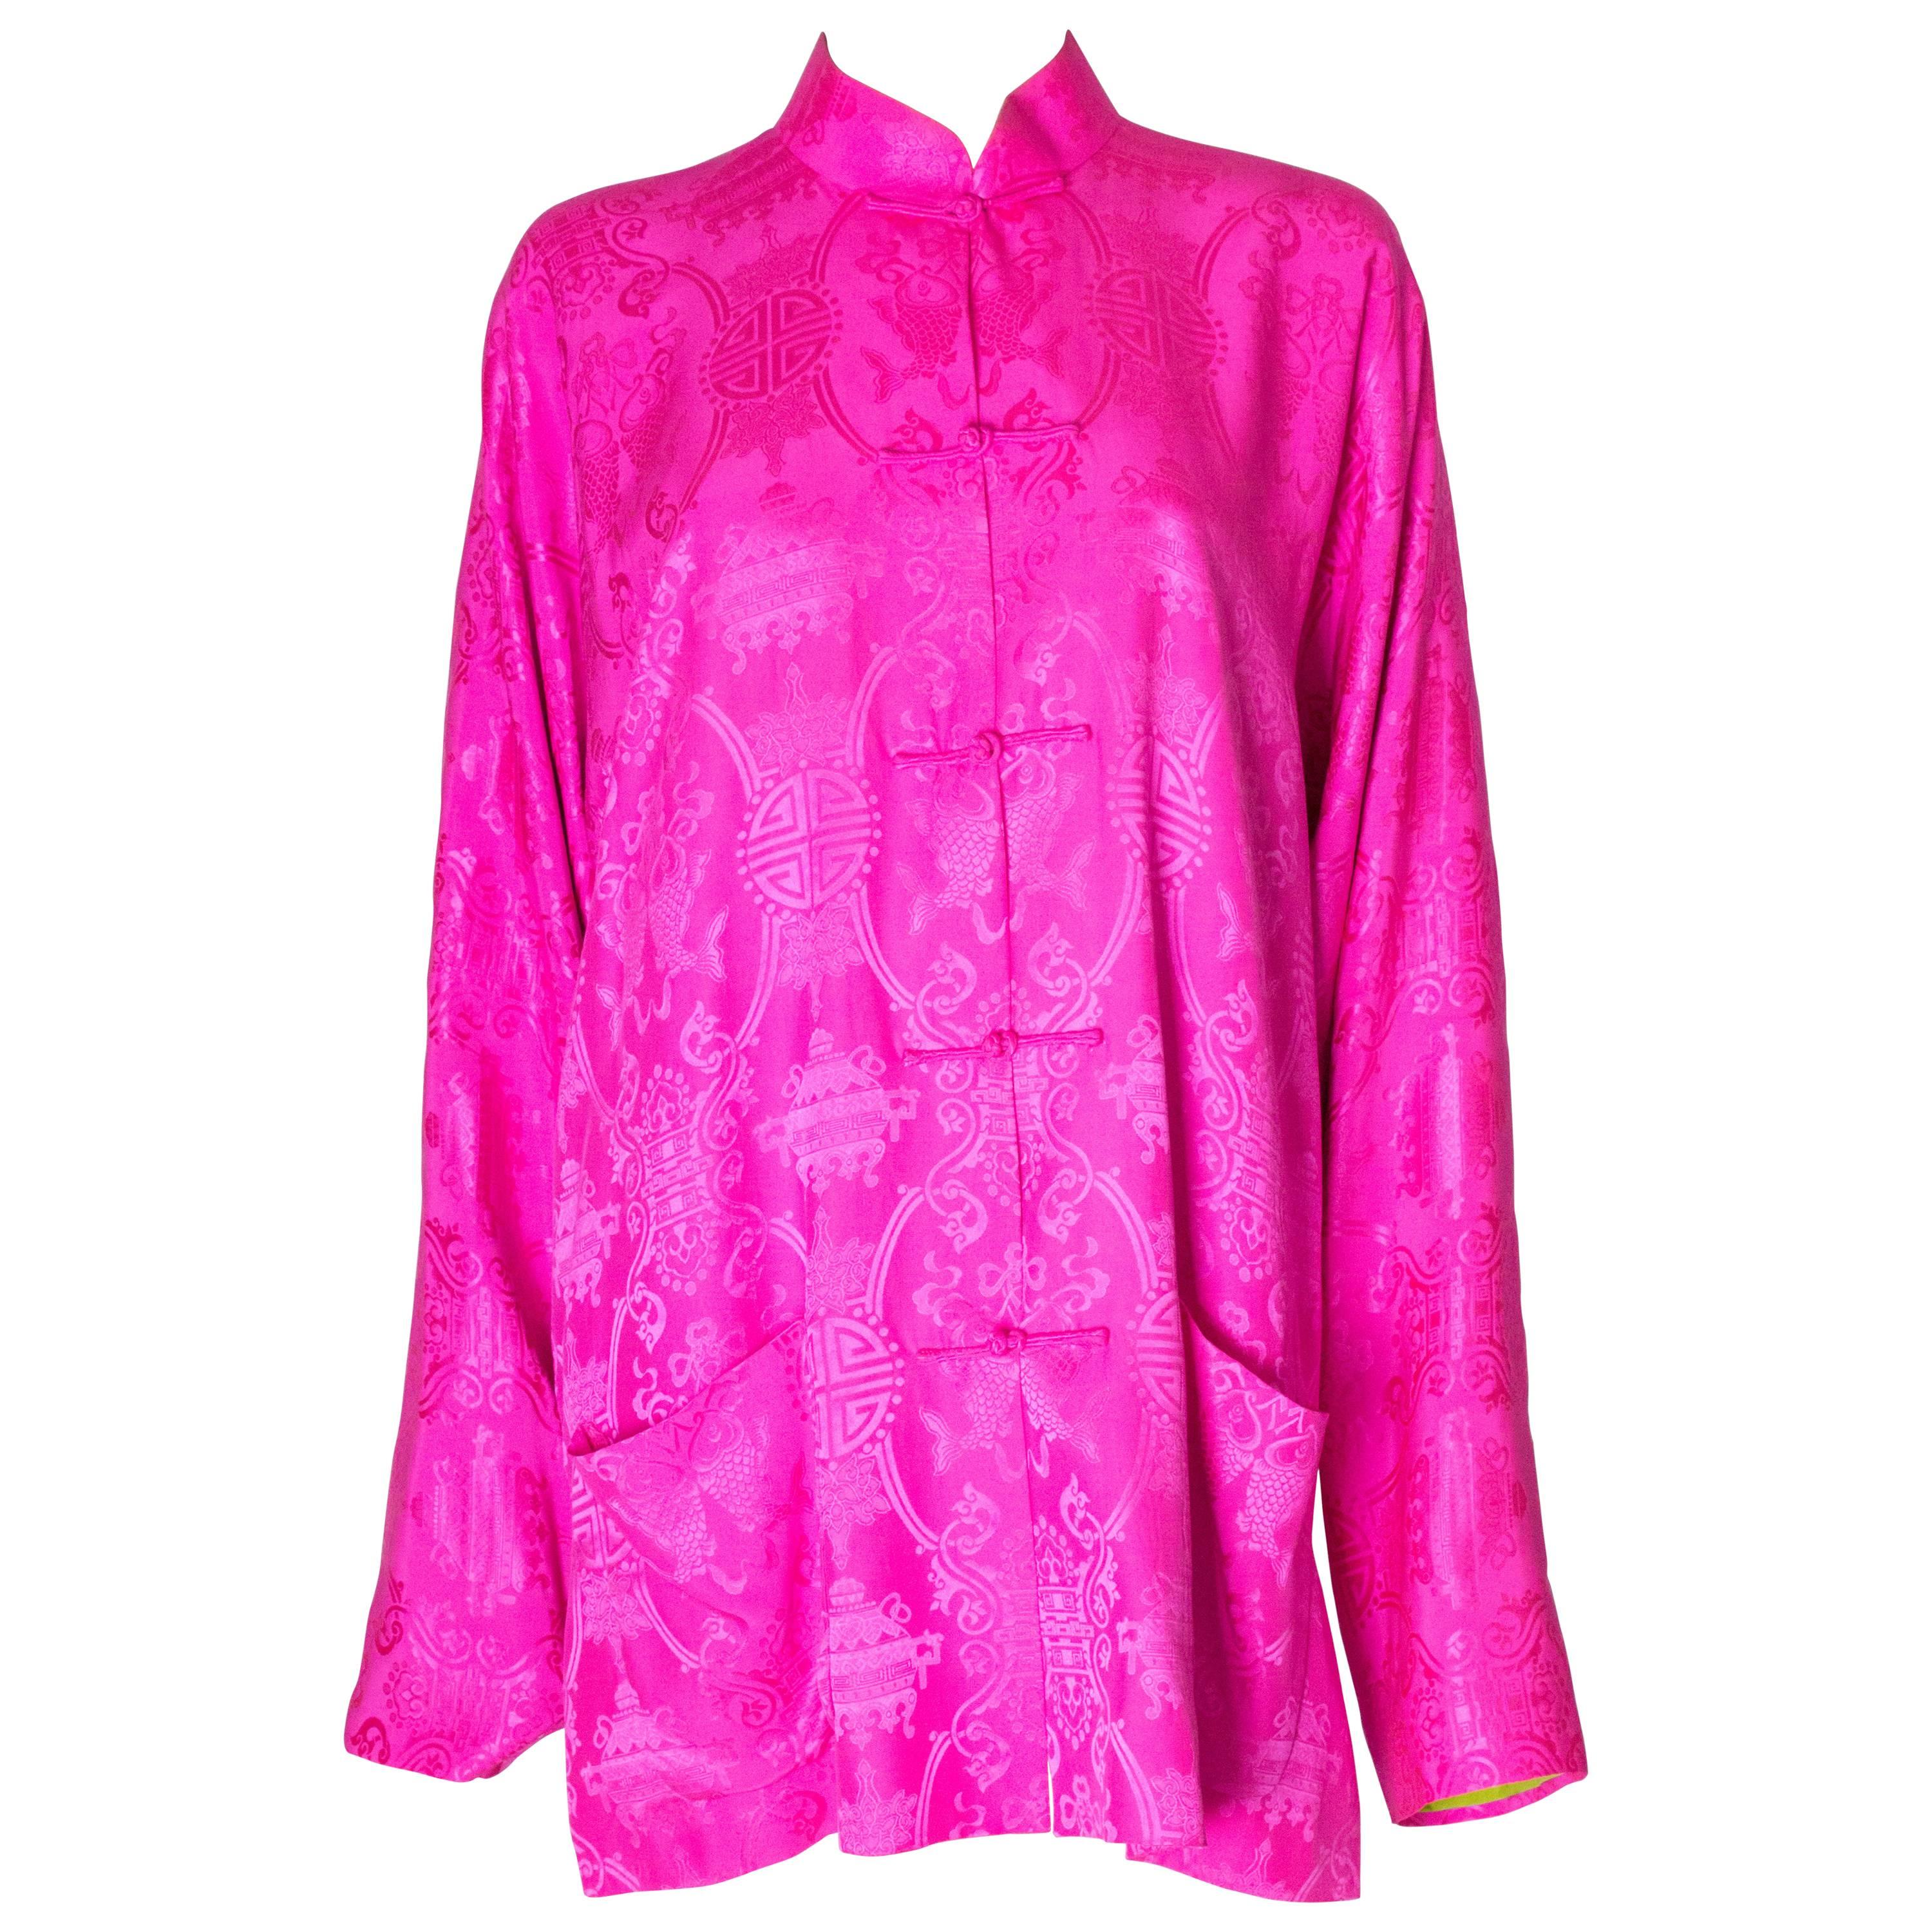 A vintage vibrant Pink Silk jacket by Shanghai Tang 